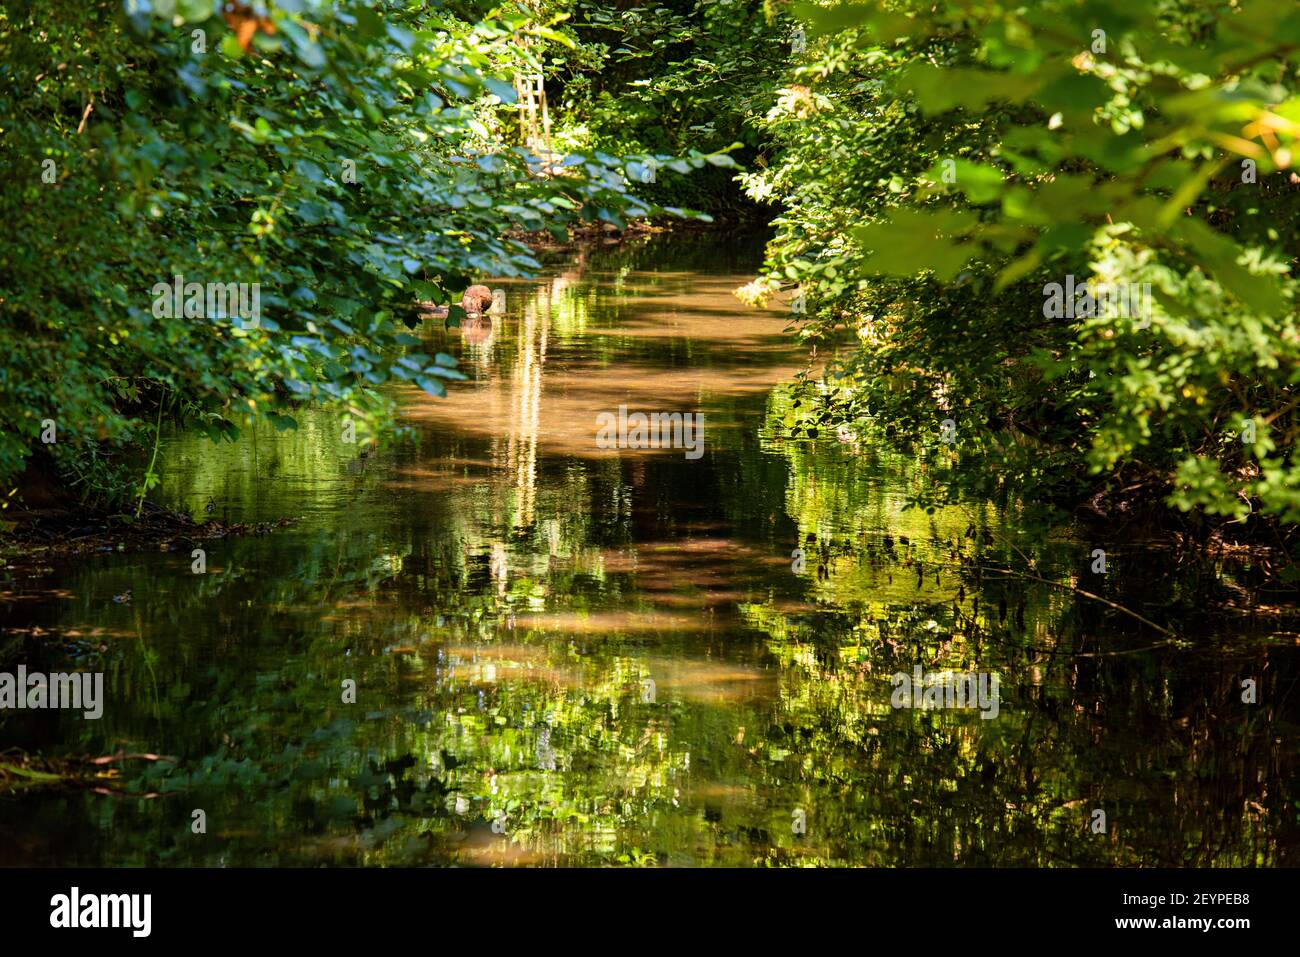 The River Darent in Shoreham near Otford in Kent, England Stock Photo